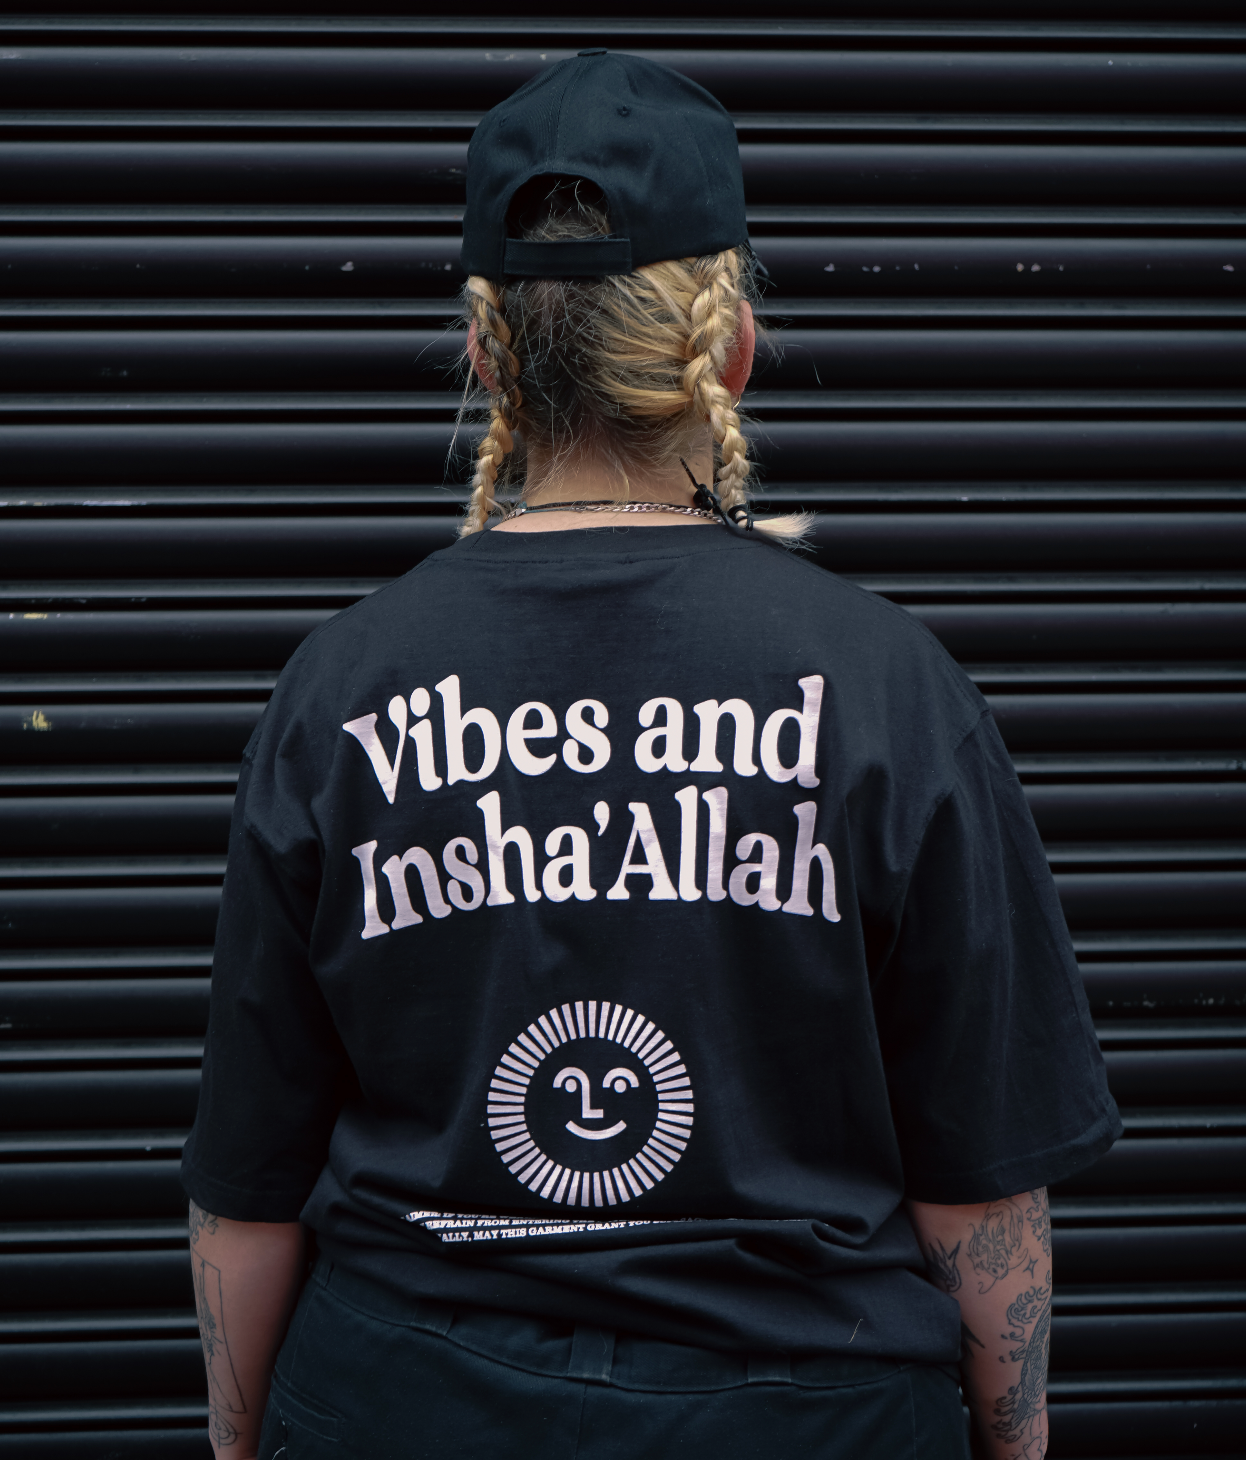 Vibes And Insha Allah Tshirt Chrome